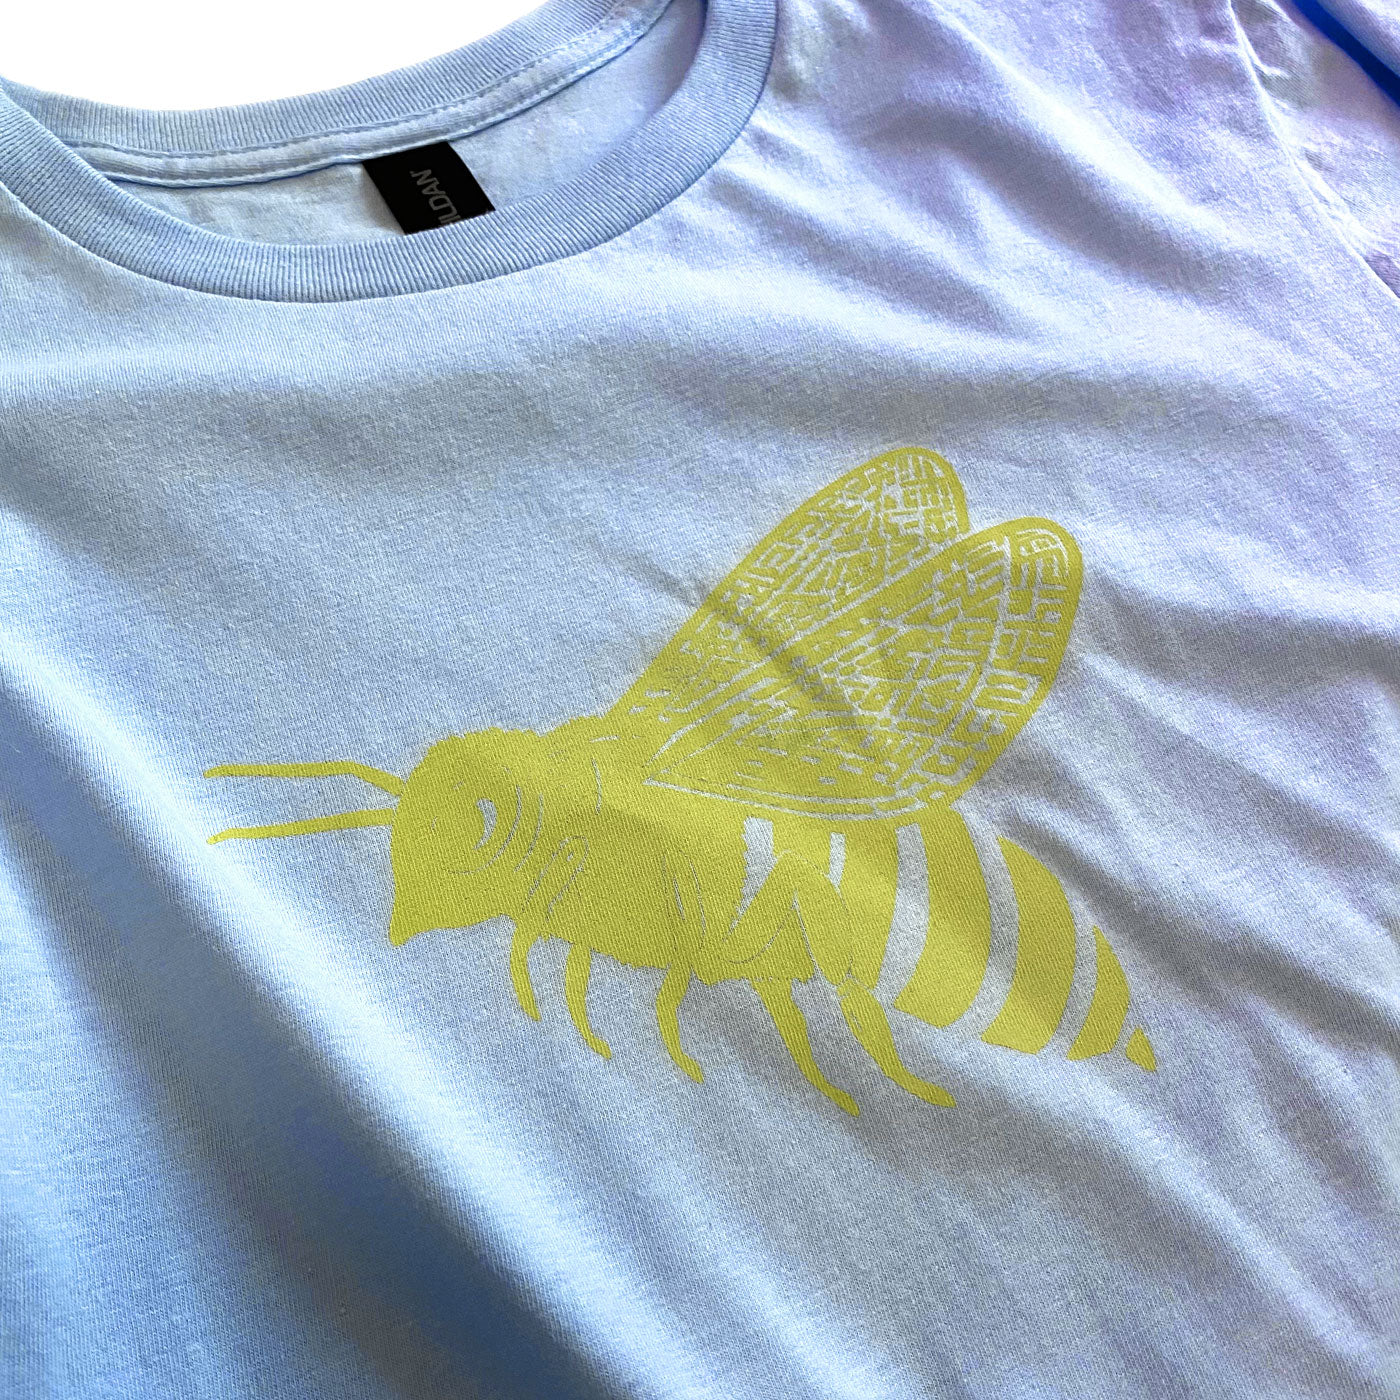 Bright Yellow Bee on Light Blue T-Shirt